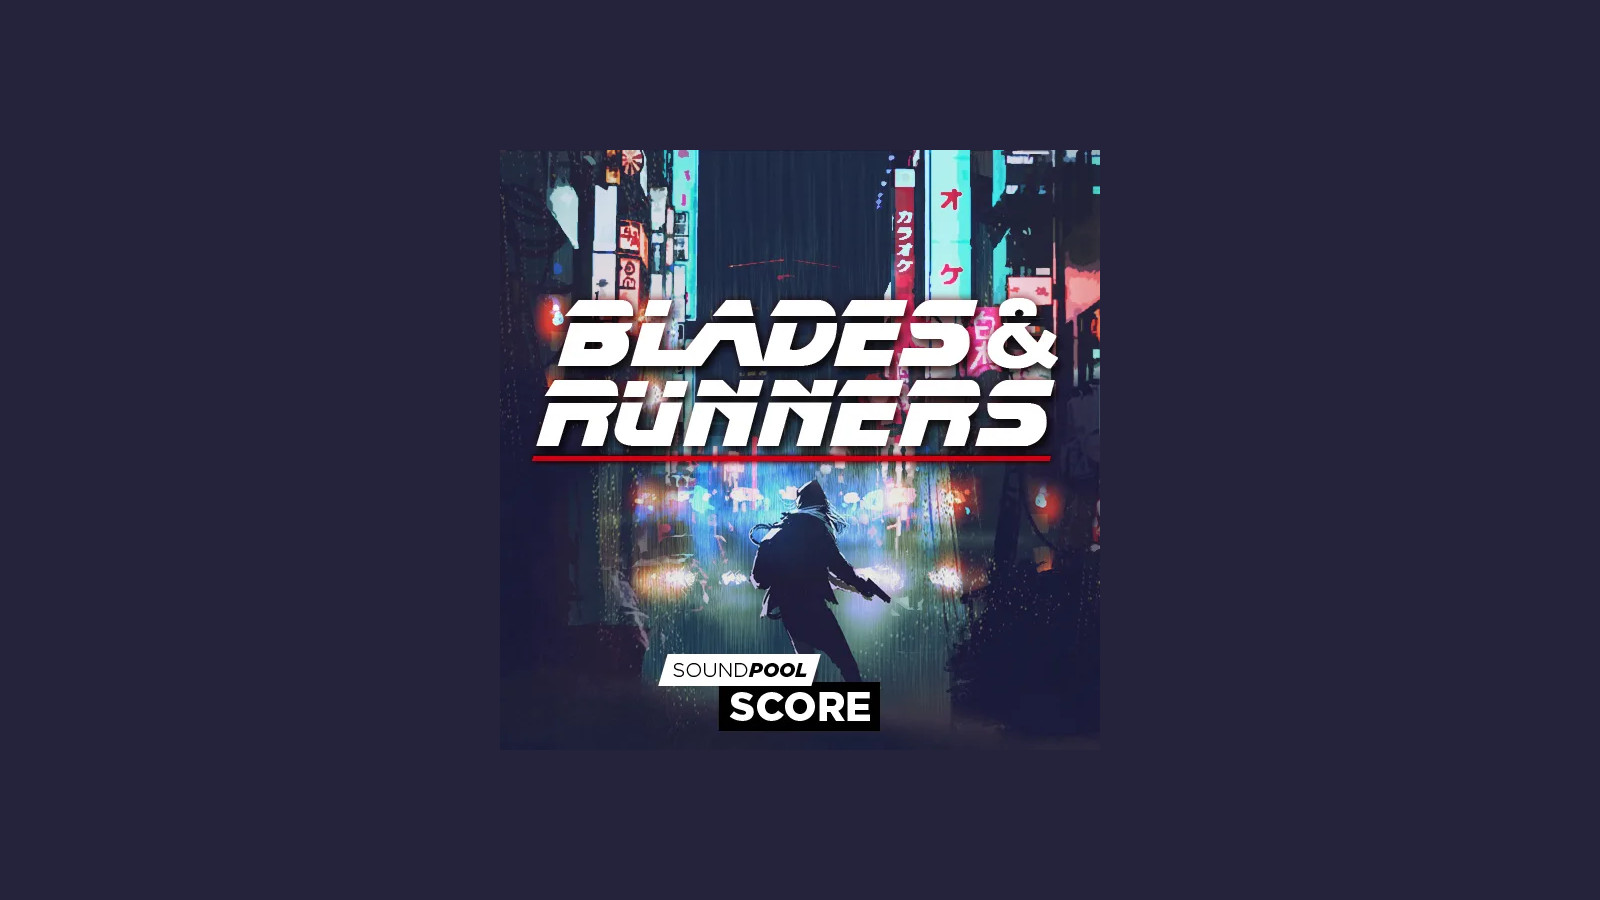 [$ 5.65] MAGIX Soundpool Blades & Runners ProducerPlanet CD Key